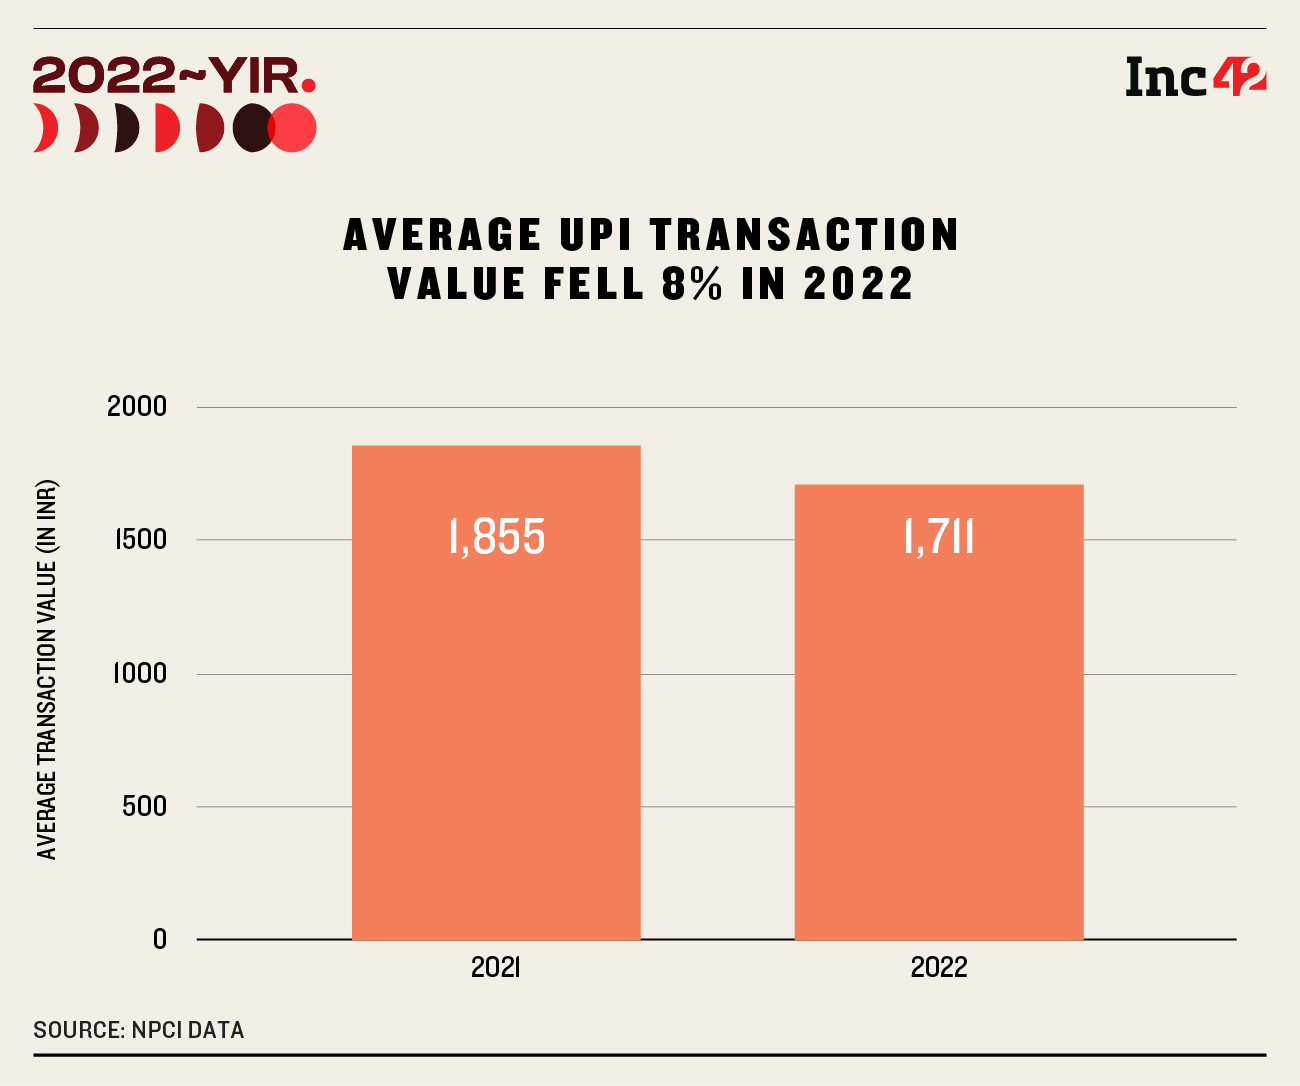 Average UPI transaction value declined in 2022